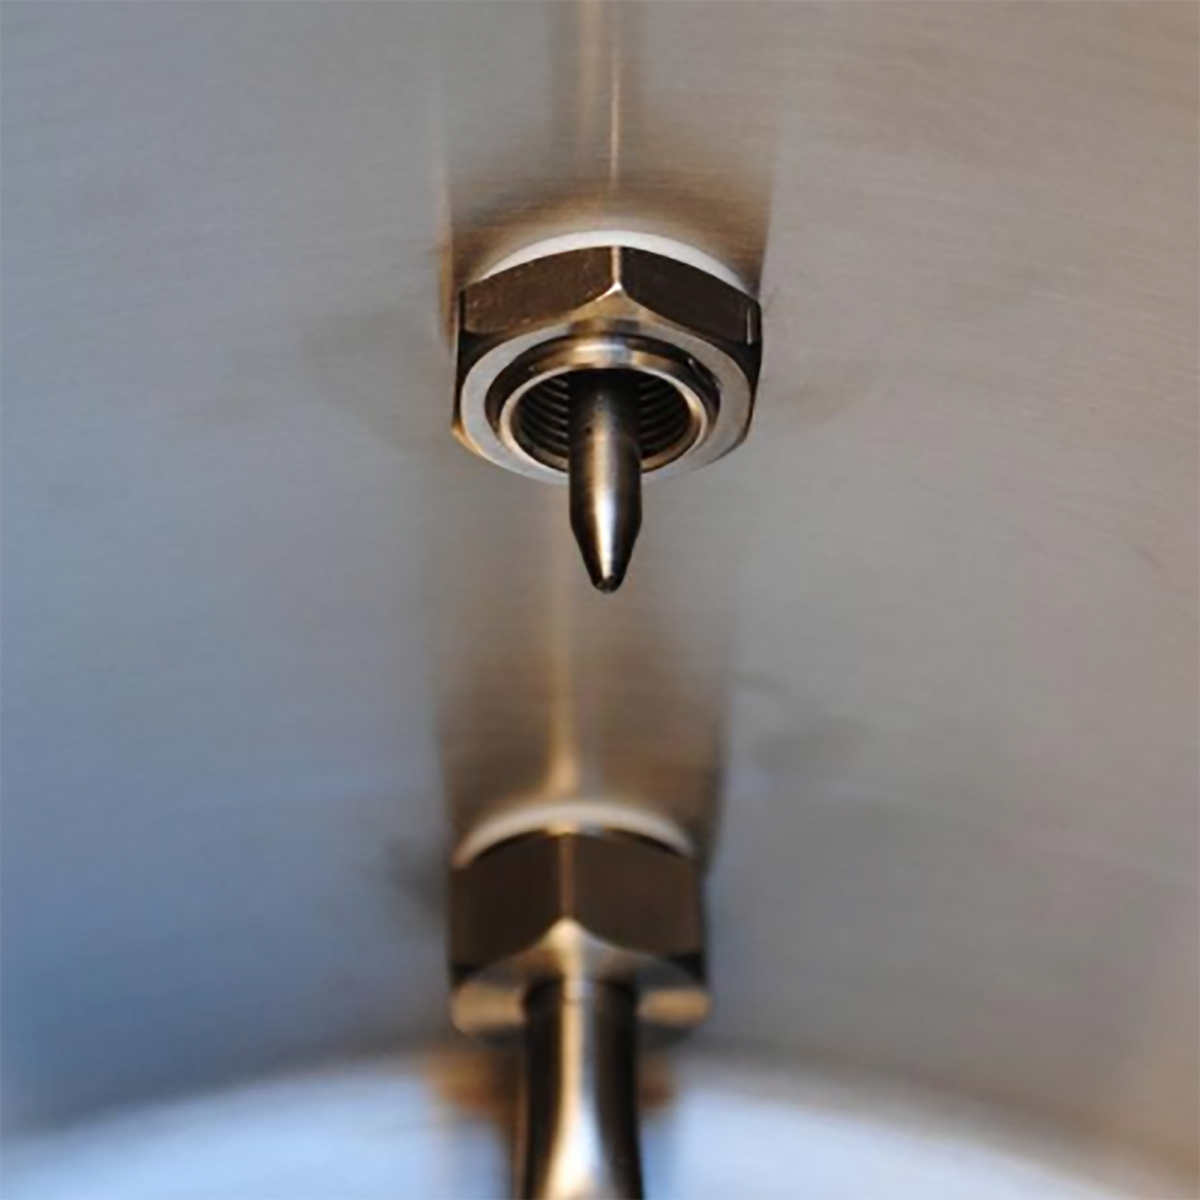 Ss Brewtech™ Thermomètre fileté (avec Ss logo) pour Brew Kettles avec passe-paroi